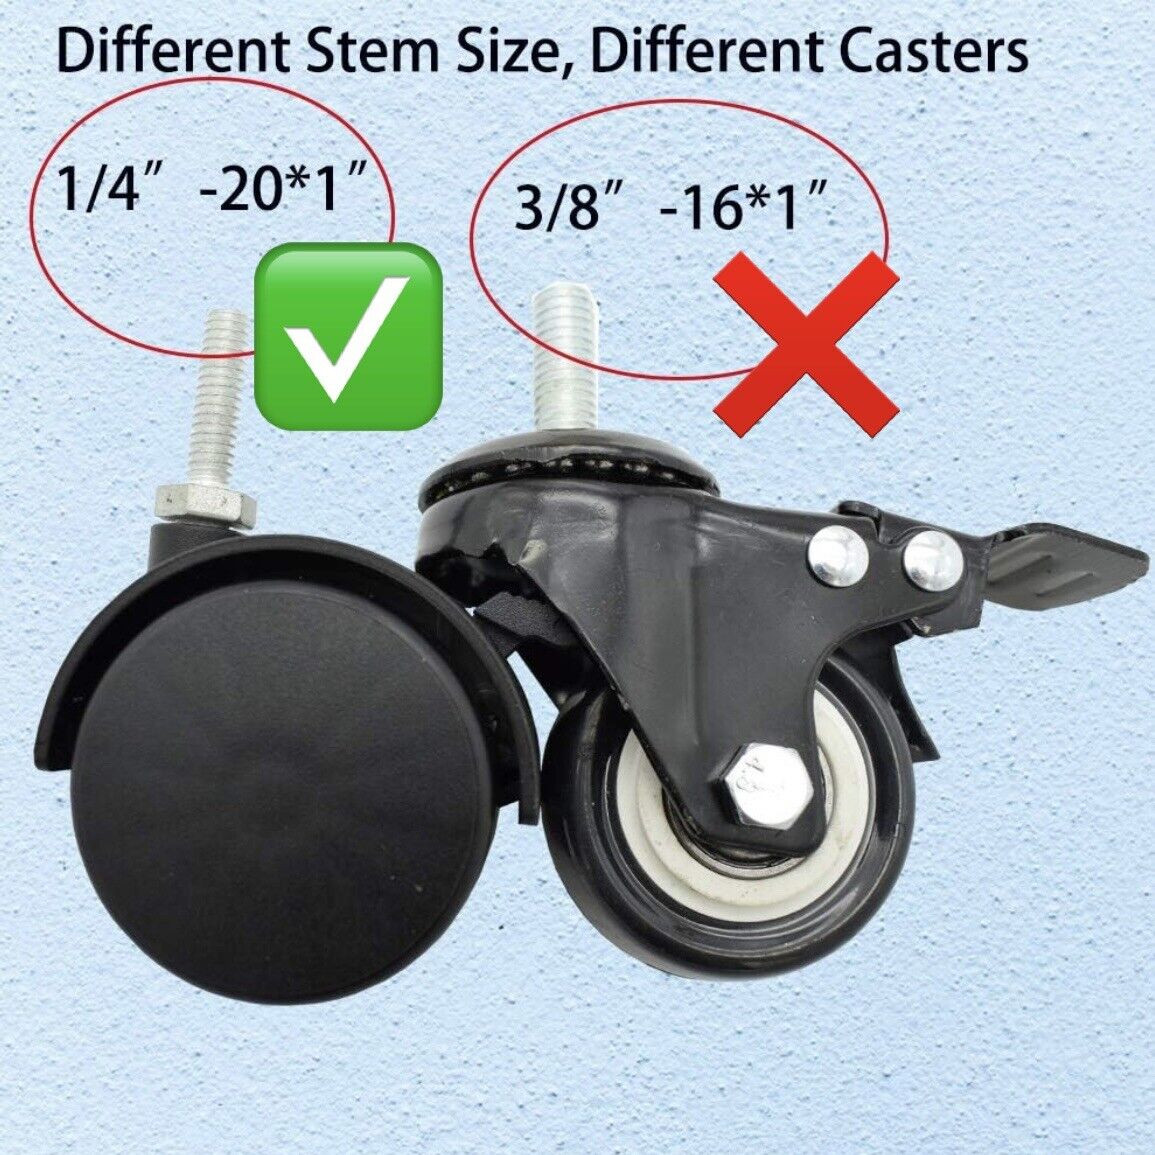 2 inch Swivel Caster Steel Stem Plastic Wheels 1/4" - 20 x 1" Stem Pack Of 4